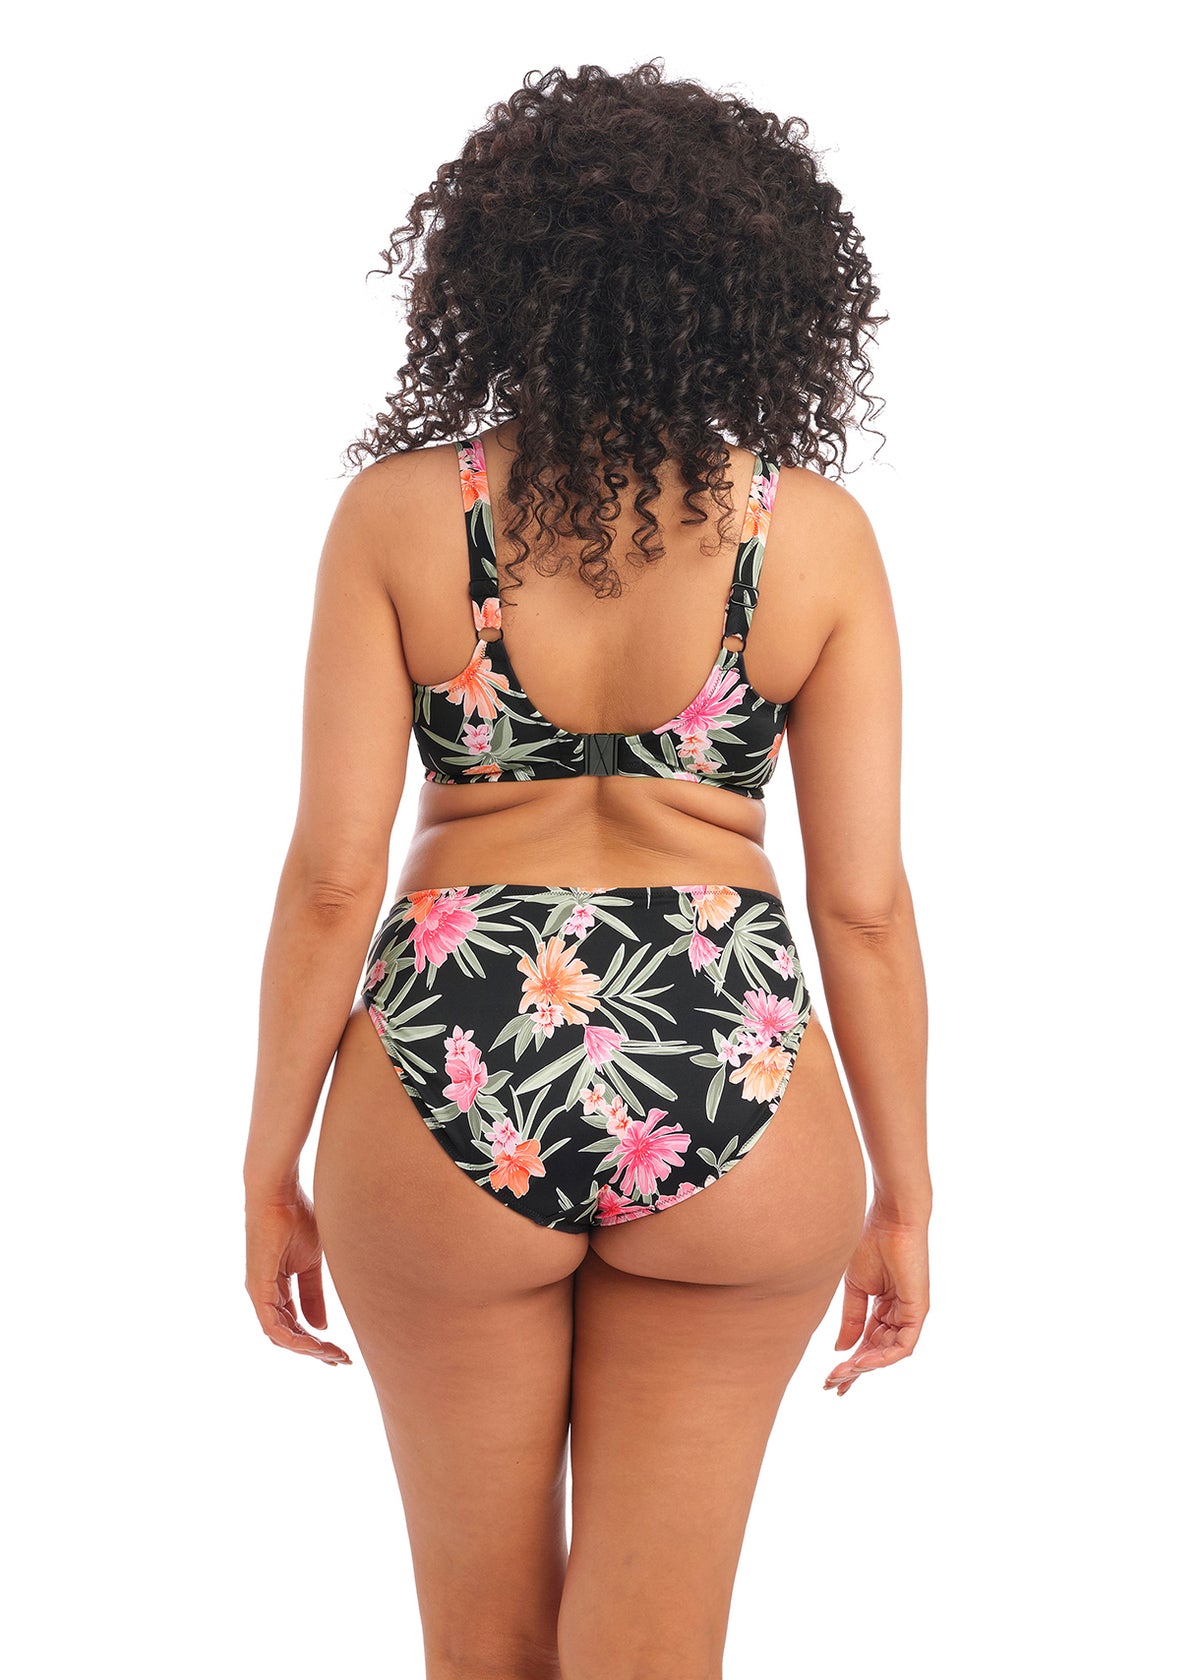 Dark Tropics Underwire Plunge Bikini Top, worn by model, back view